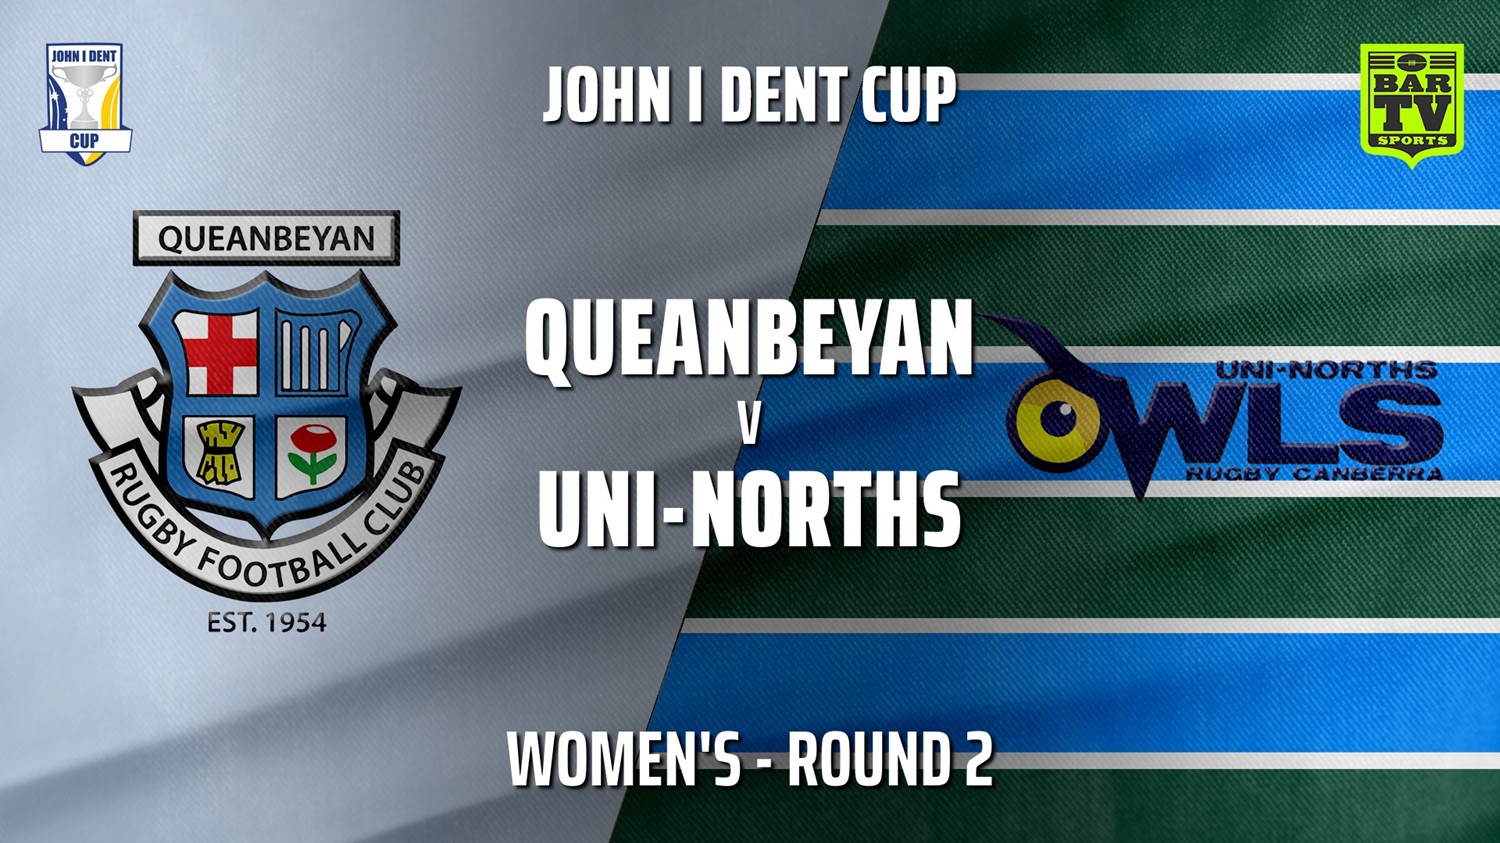 210423-John I Dent Round 2 - Women's - Queanbeyan Whites v UNI-Norths Minigame Slate Image